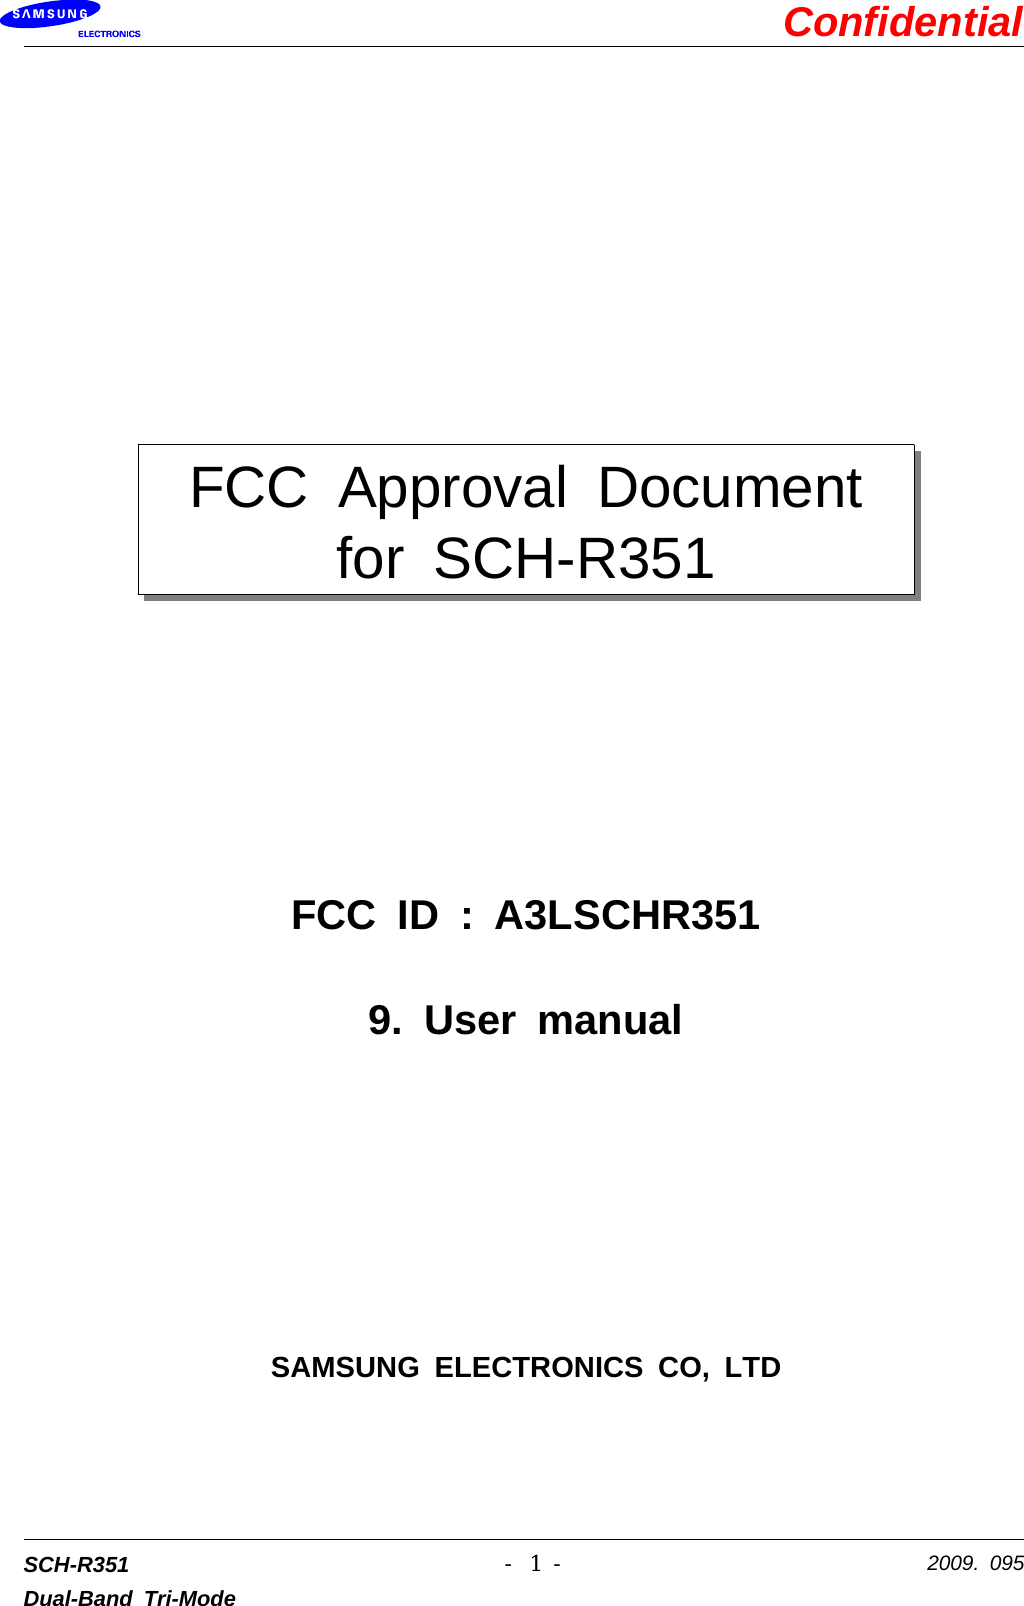 ConfidentialSCH-R351Dual-Band Tri-Mode2009. 095-1-FCC Approval Documentfor SCH-R351FCCID:A3LSCHR3519. User manualSAMSUNG ELECTRONICS CO, LTD